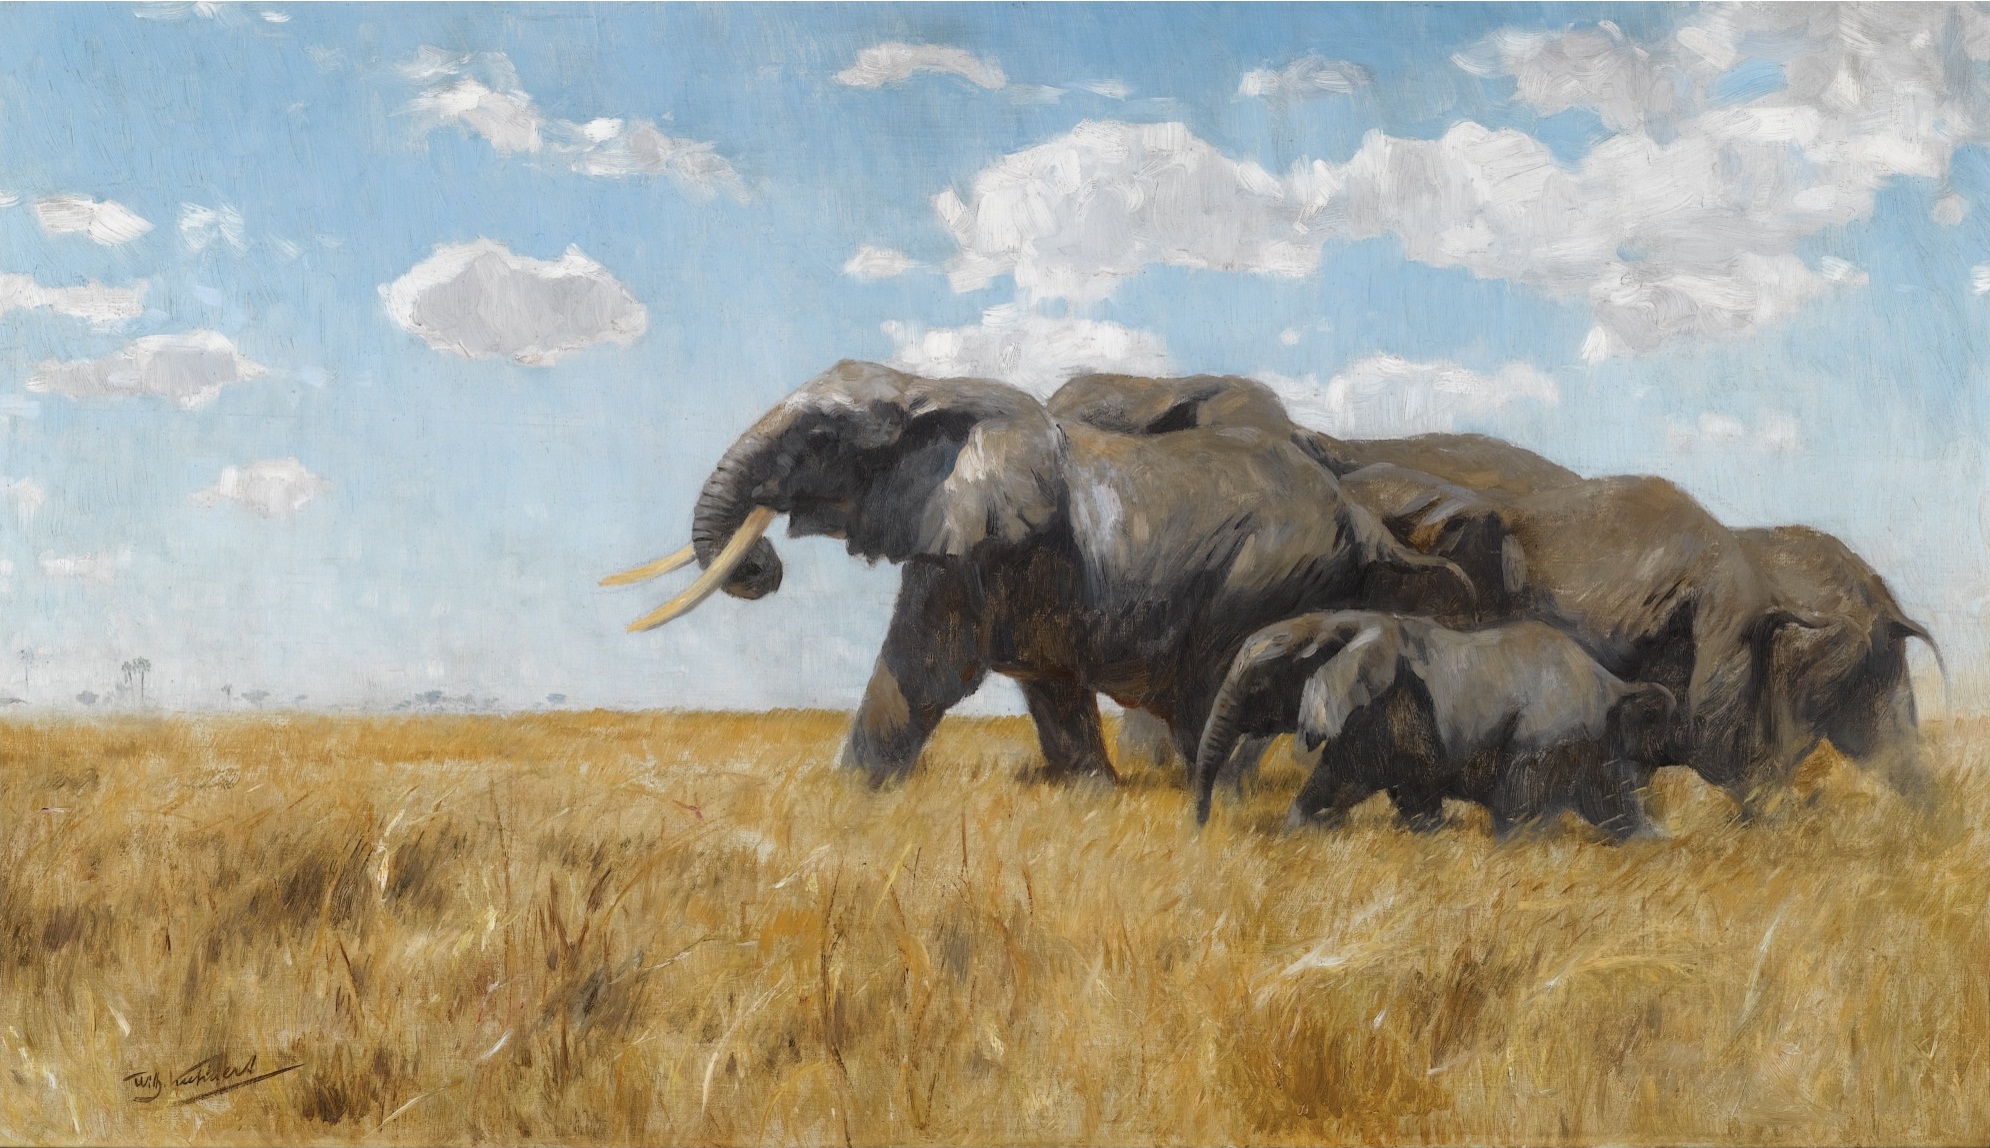 A group of three elephants walk through a vast landscape.